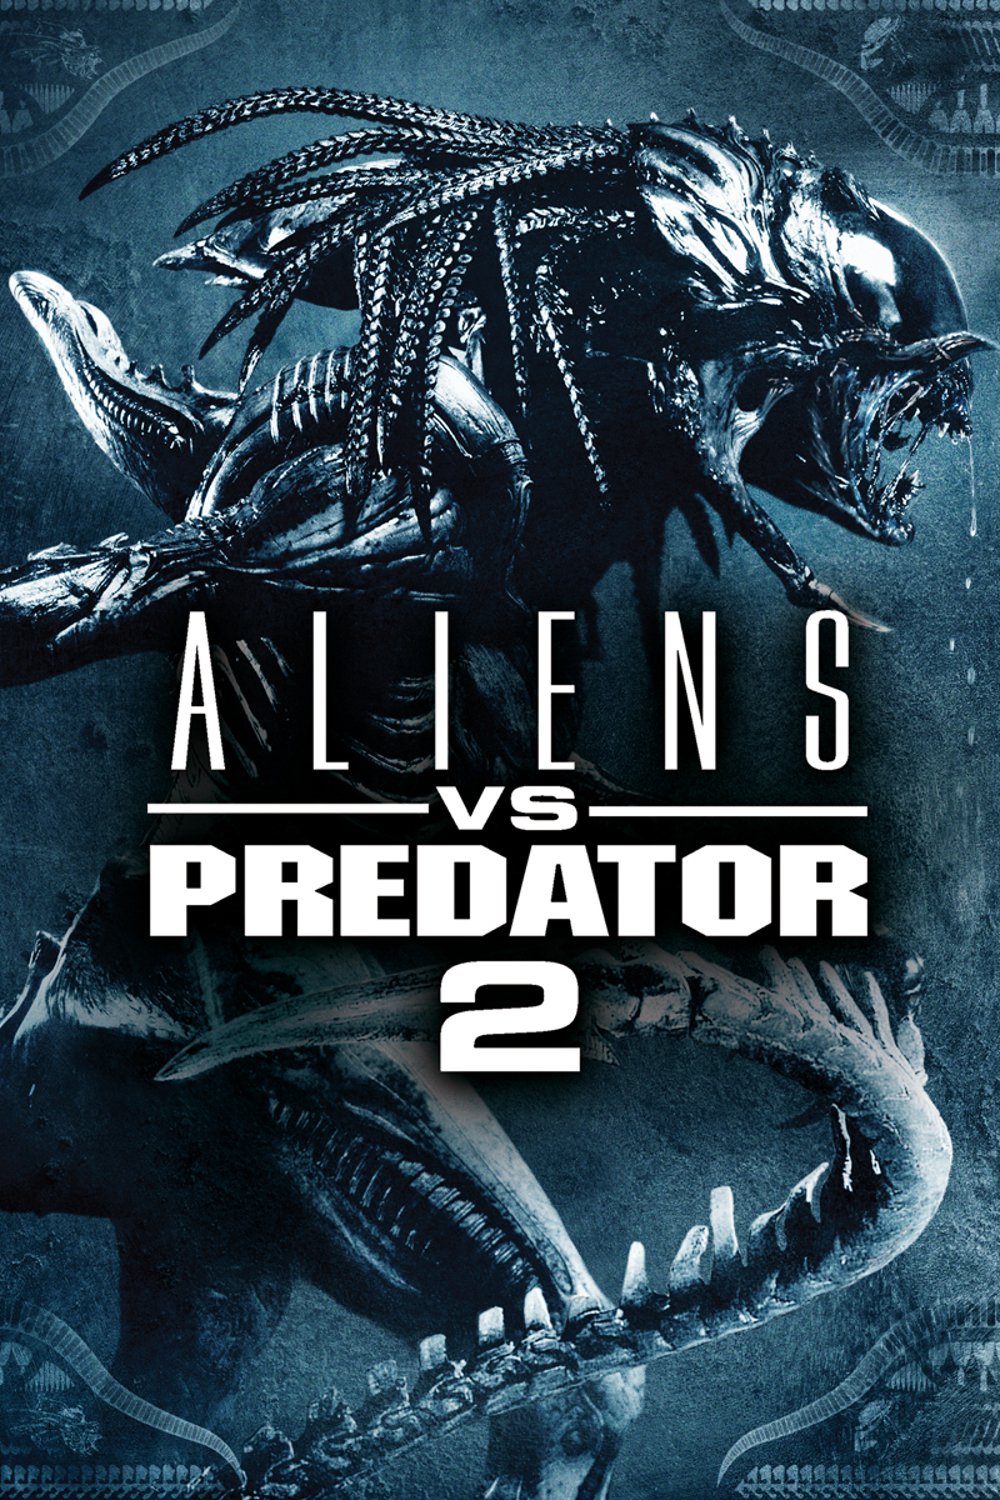 Plakat von "Aliens vs. Predator 2"